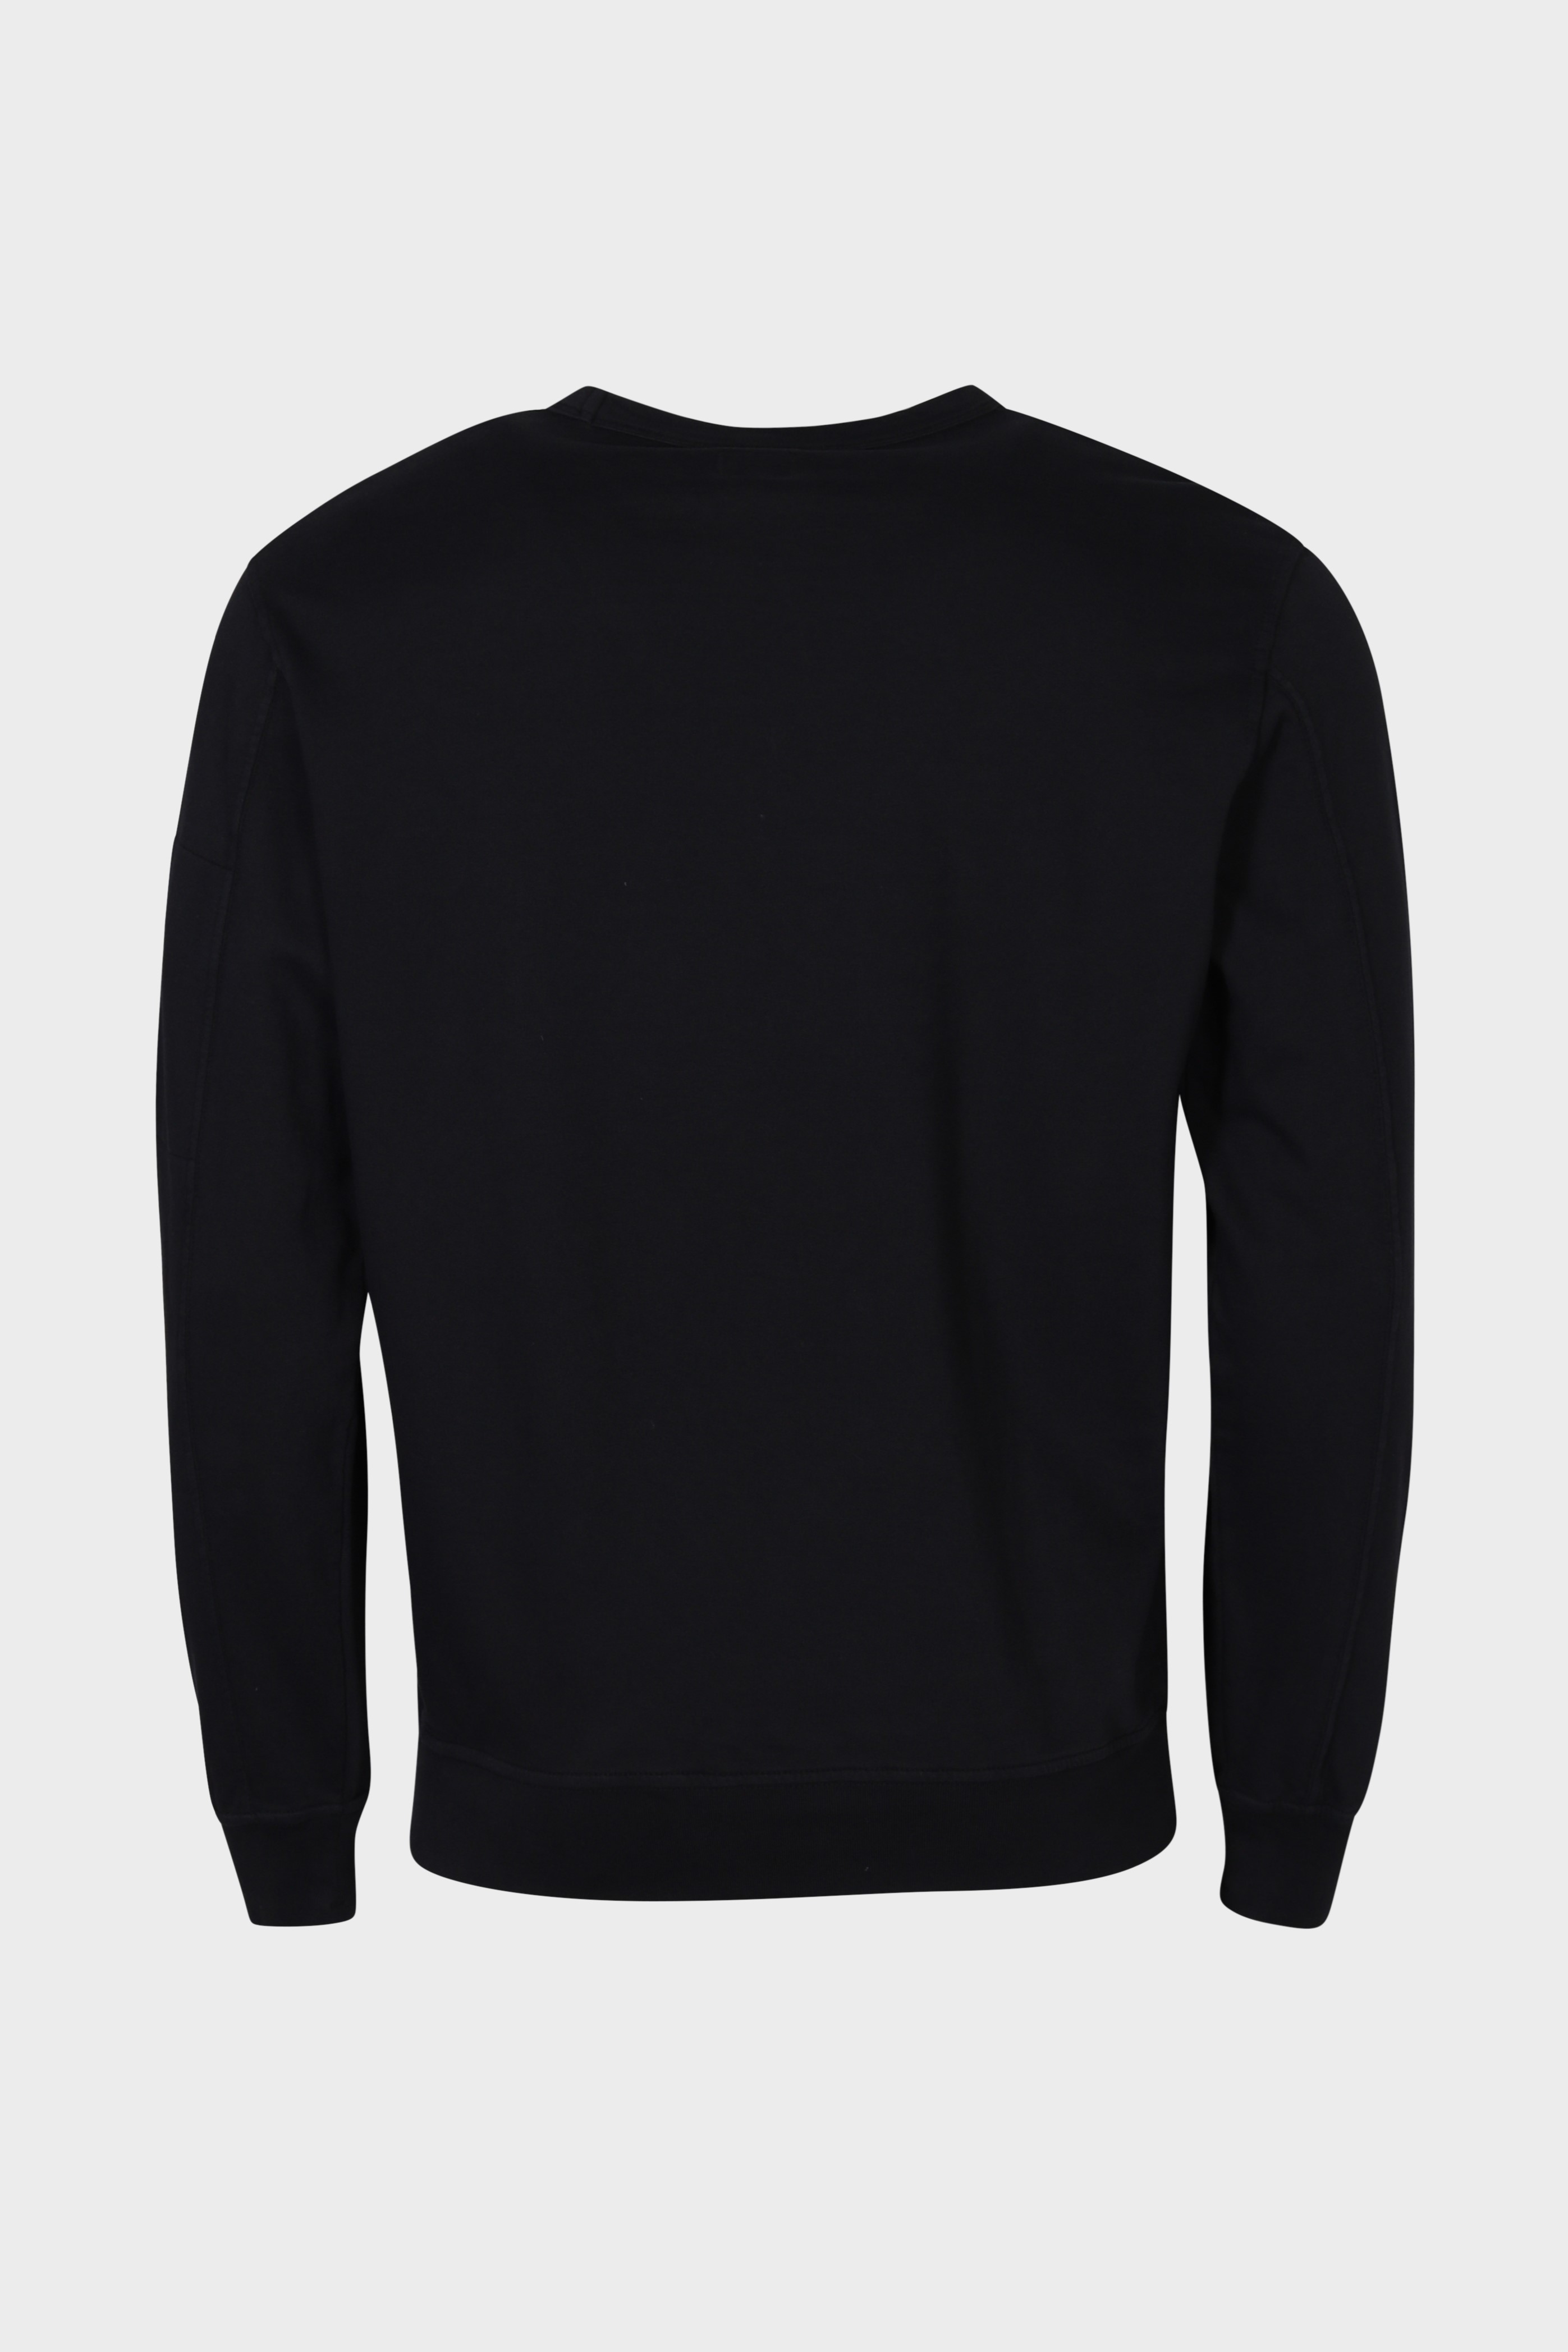 C.P. COMPANY Light Fleece Sweatshirt in Black M